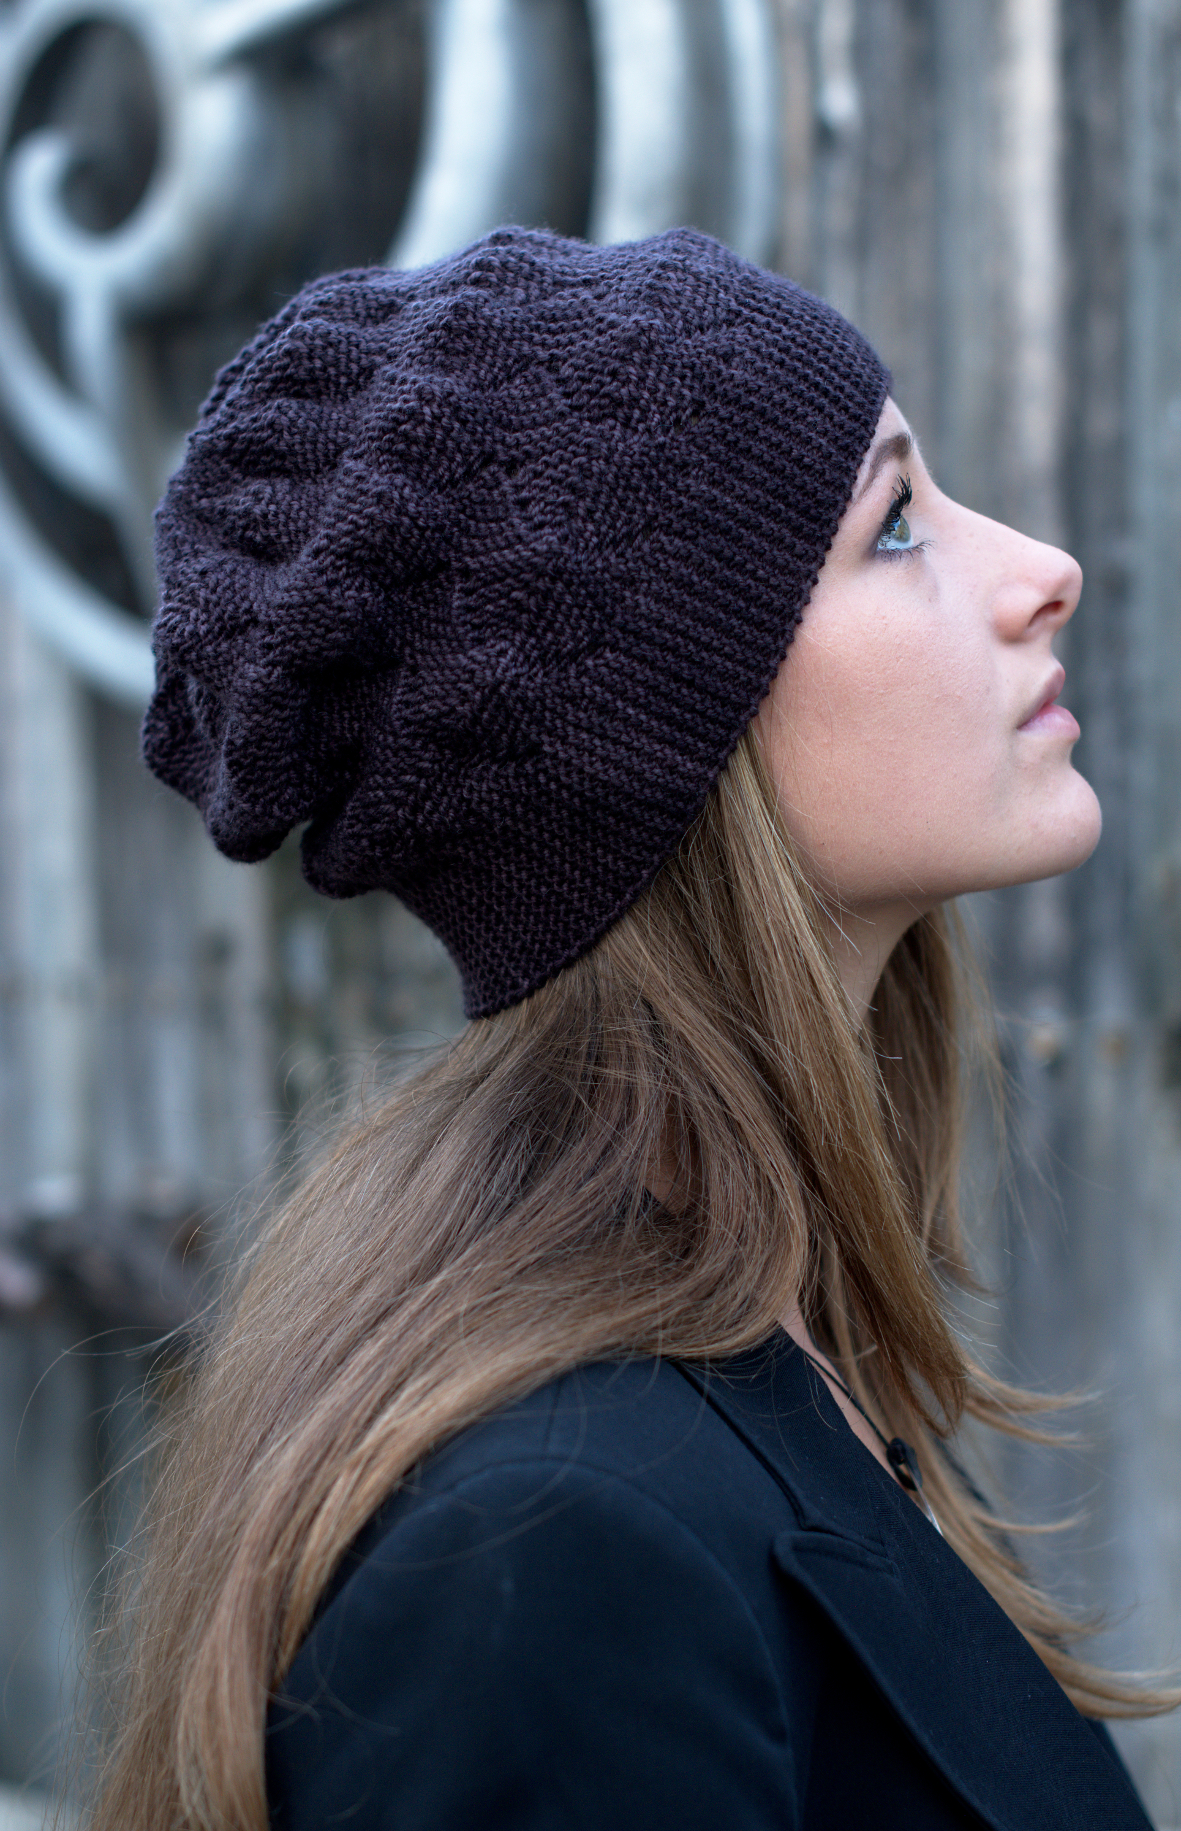 Sagitta sideways knit texture Hat knitting pattern